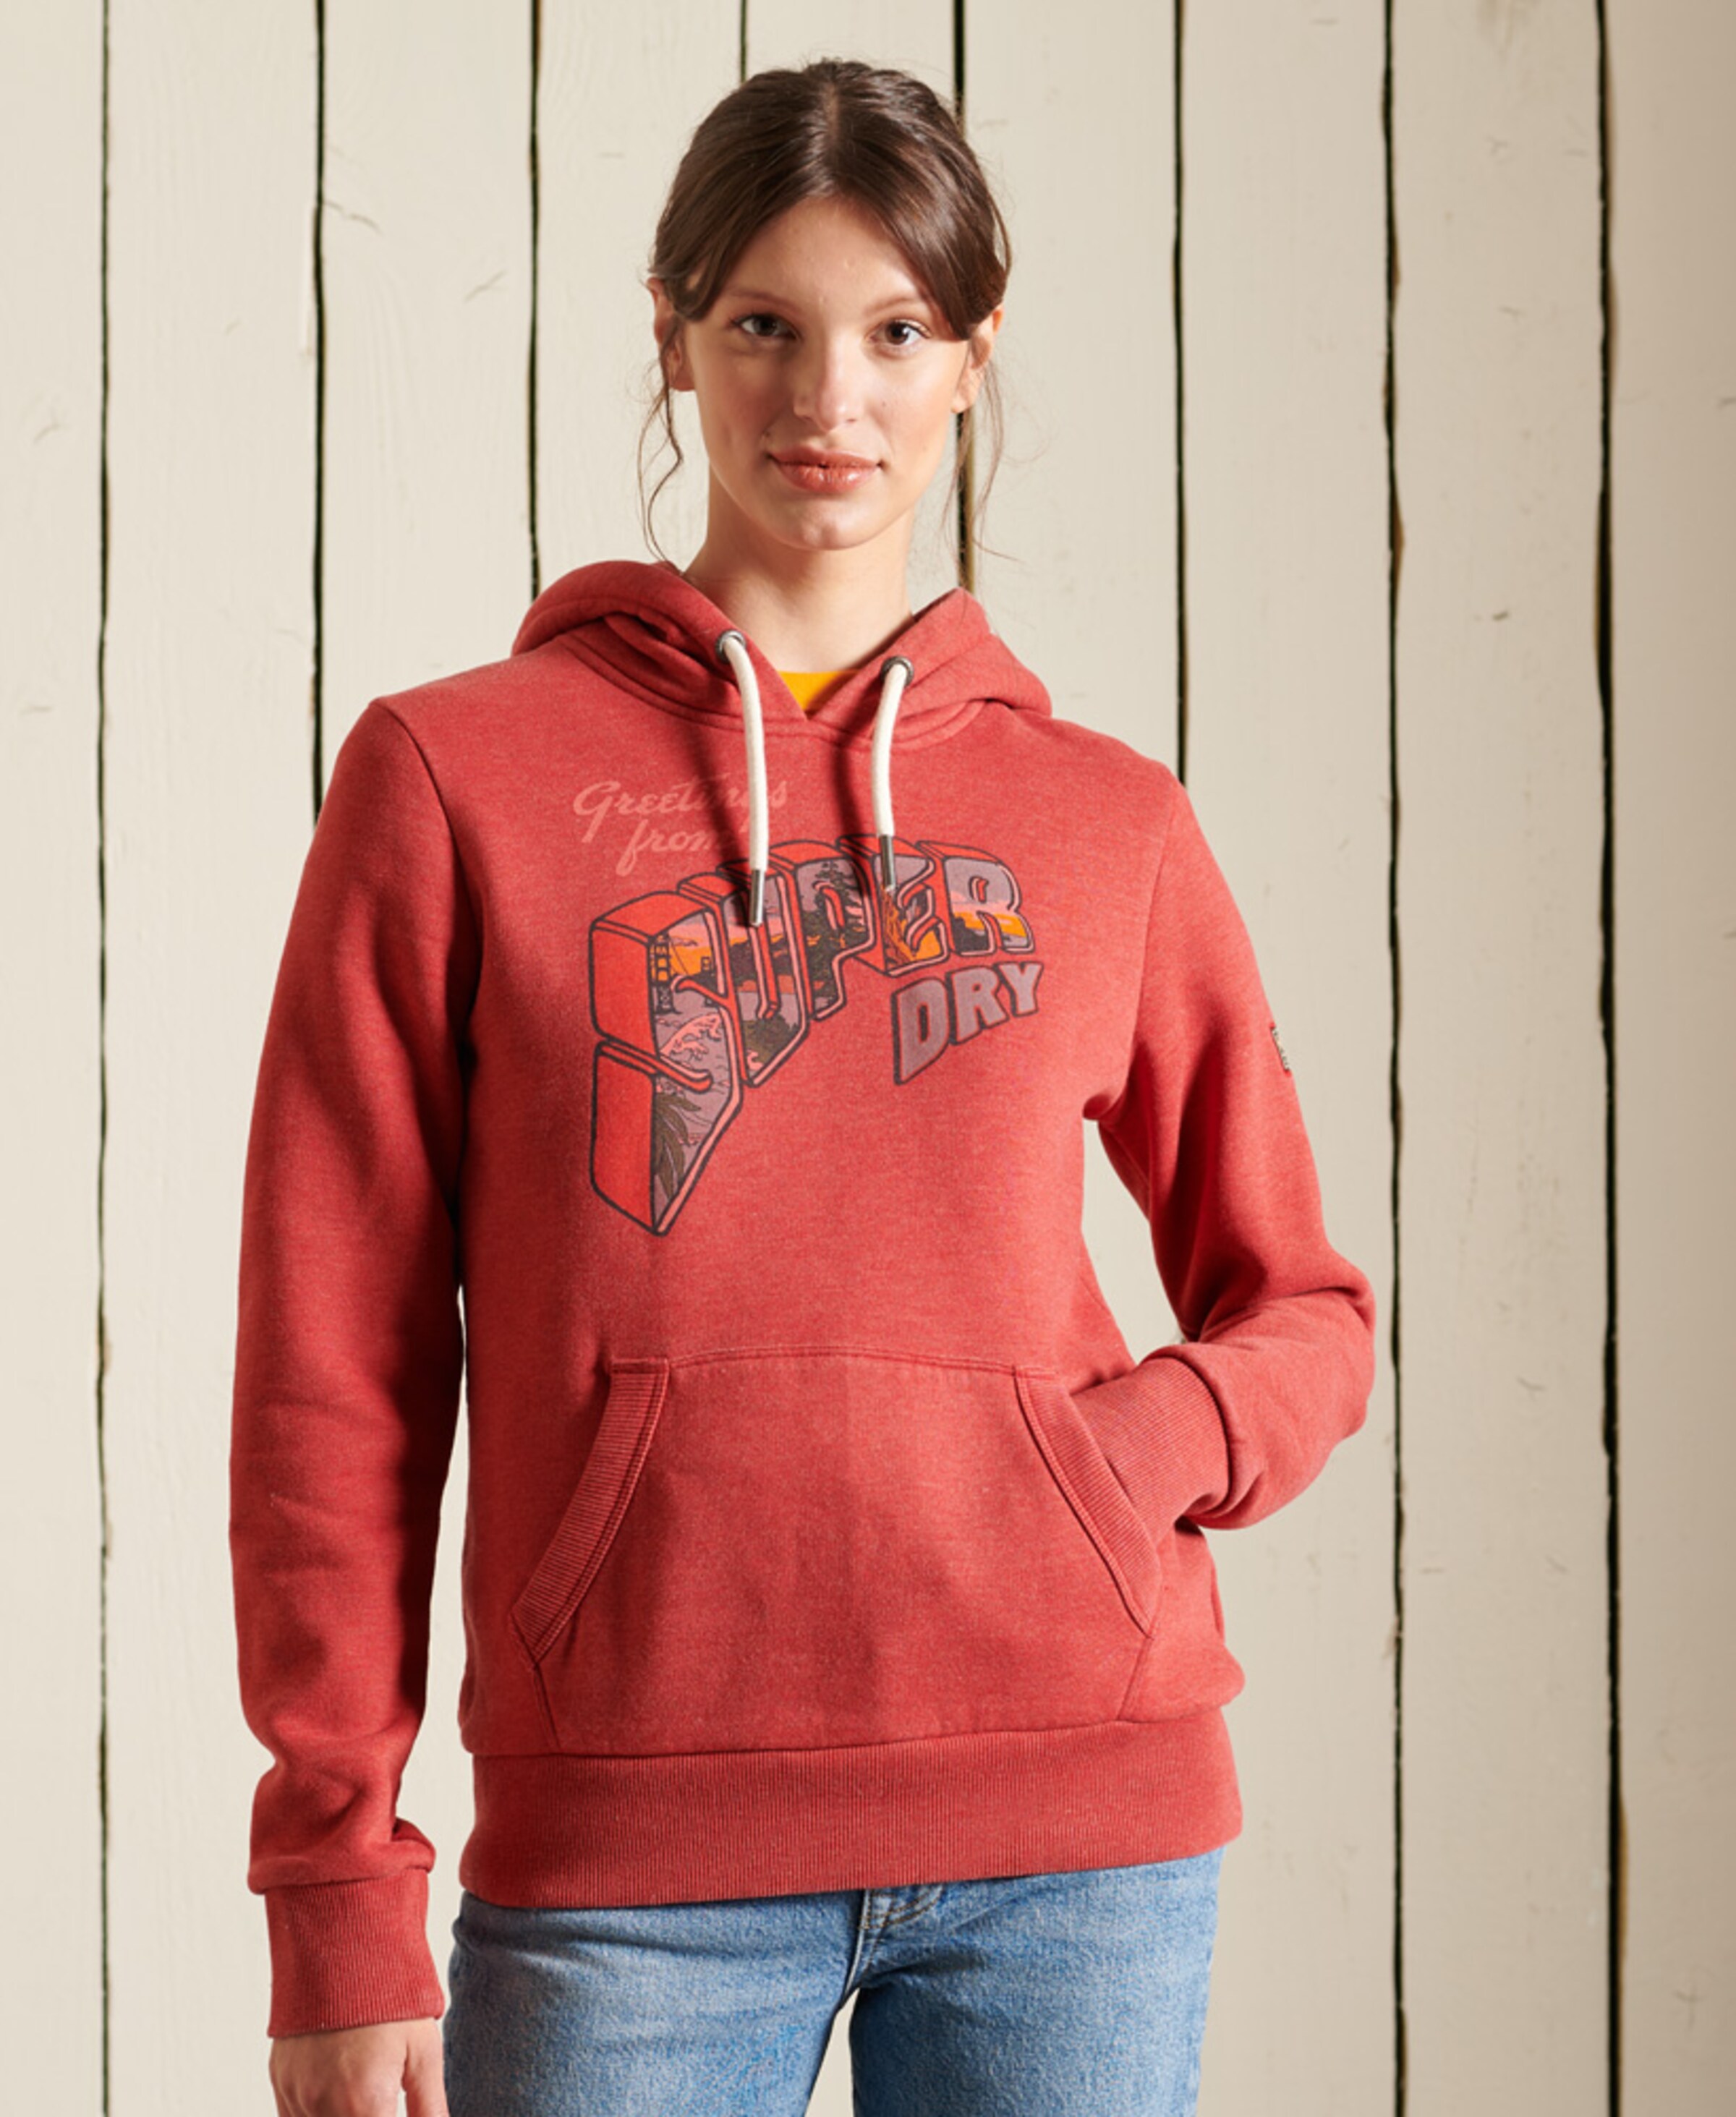 Frauen Große Größen Superdry Sweatshirt in Rot - AO08776